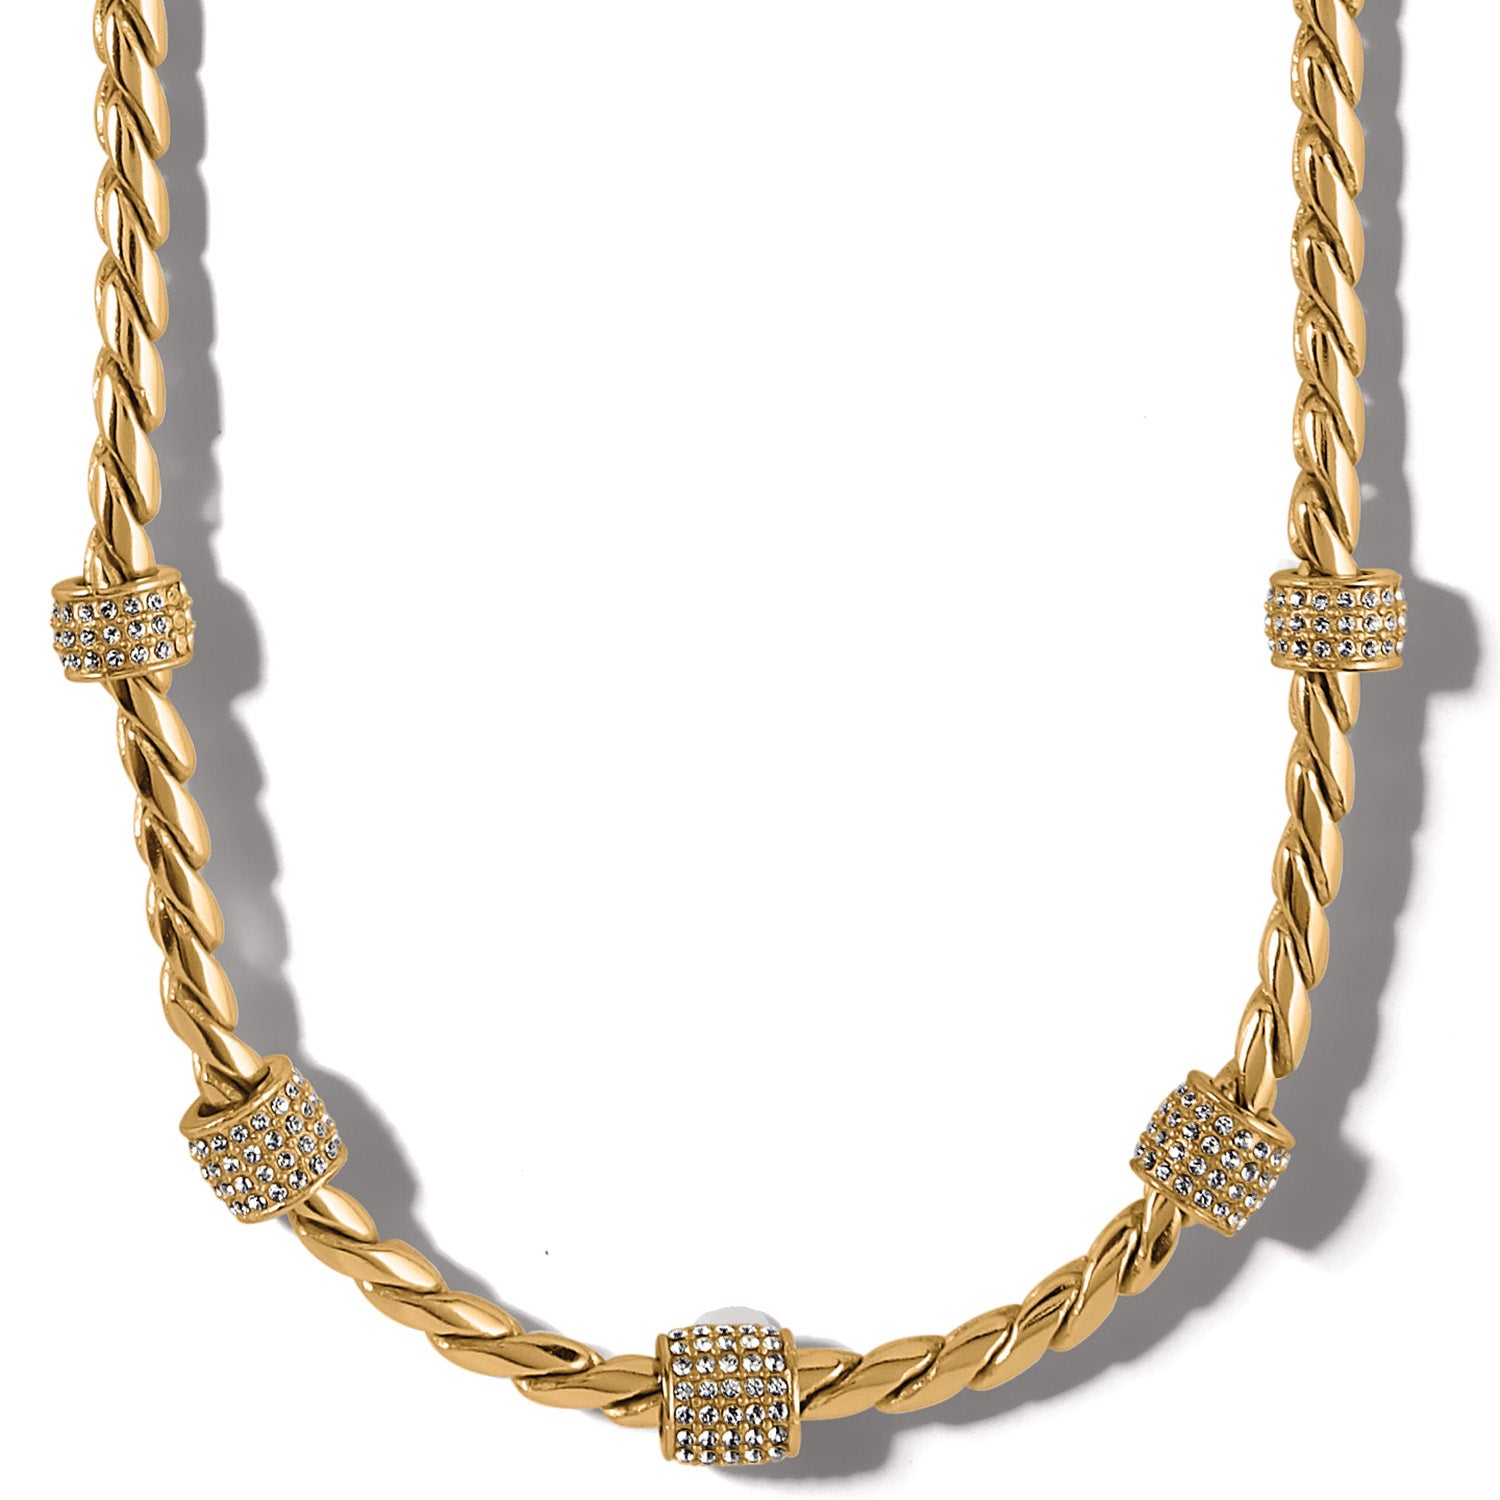 Brighton - Meridian Gold Necklace - Image 1